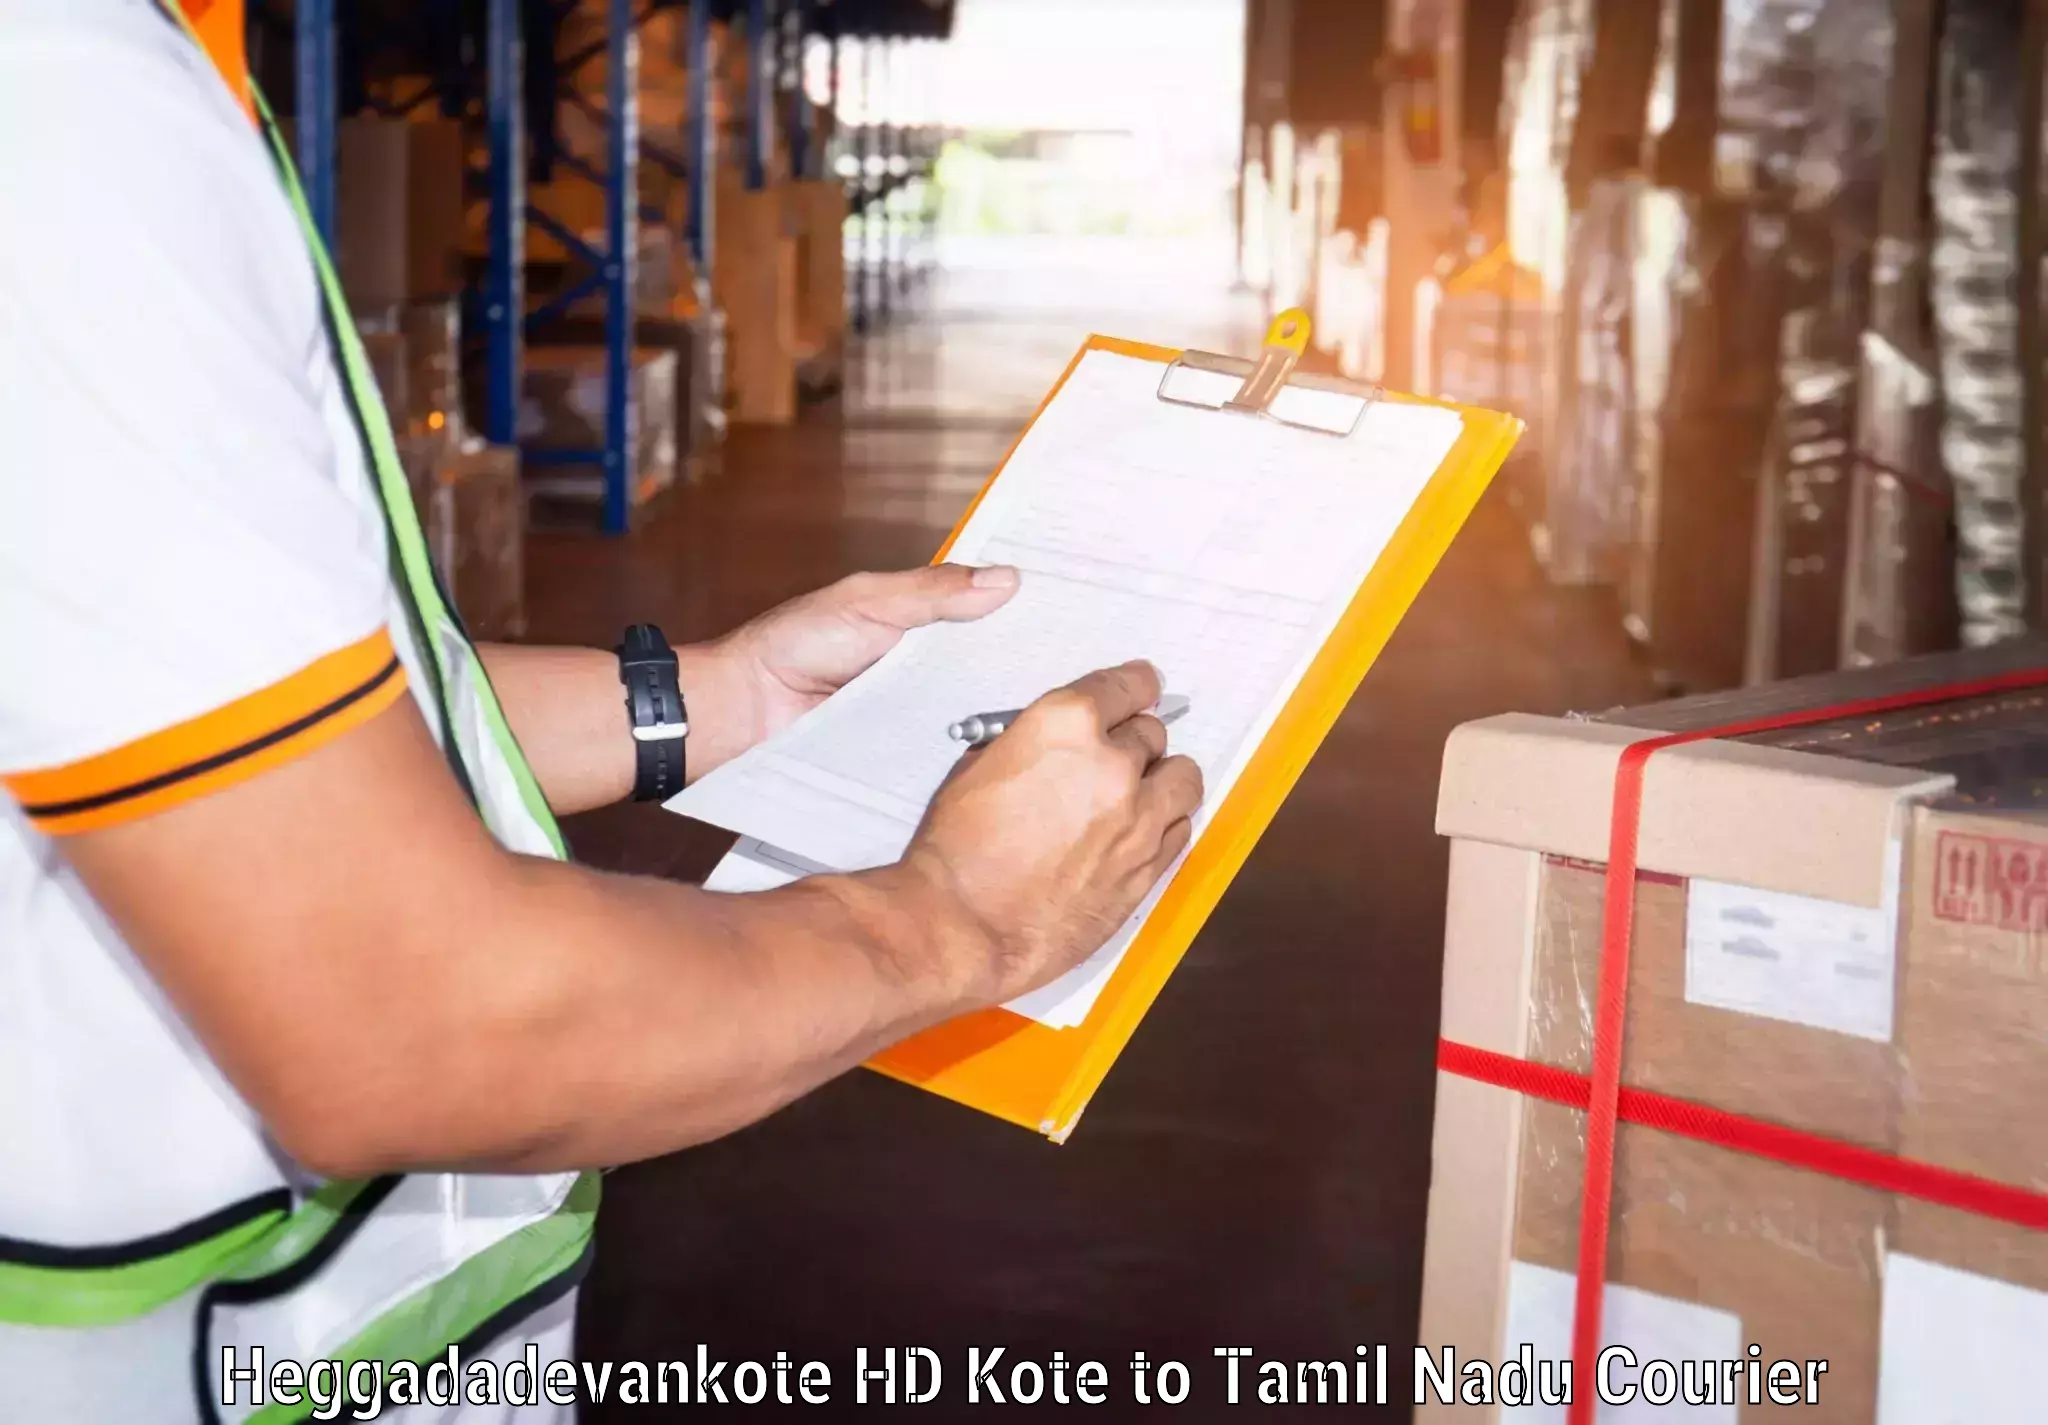 Versatile courier options Heggadadevankote HD Kote to Rathinasabapathy Puram